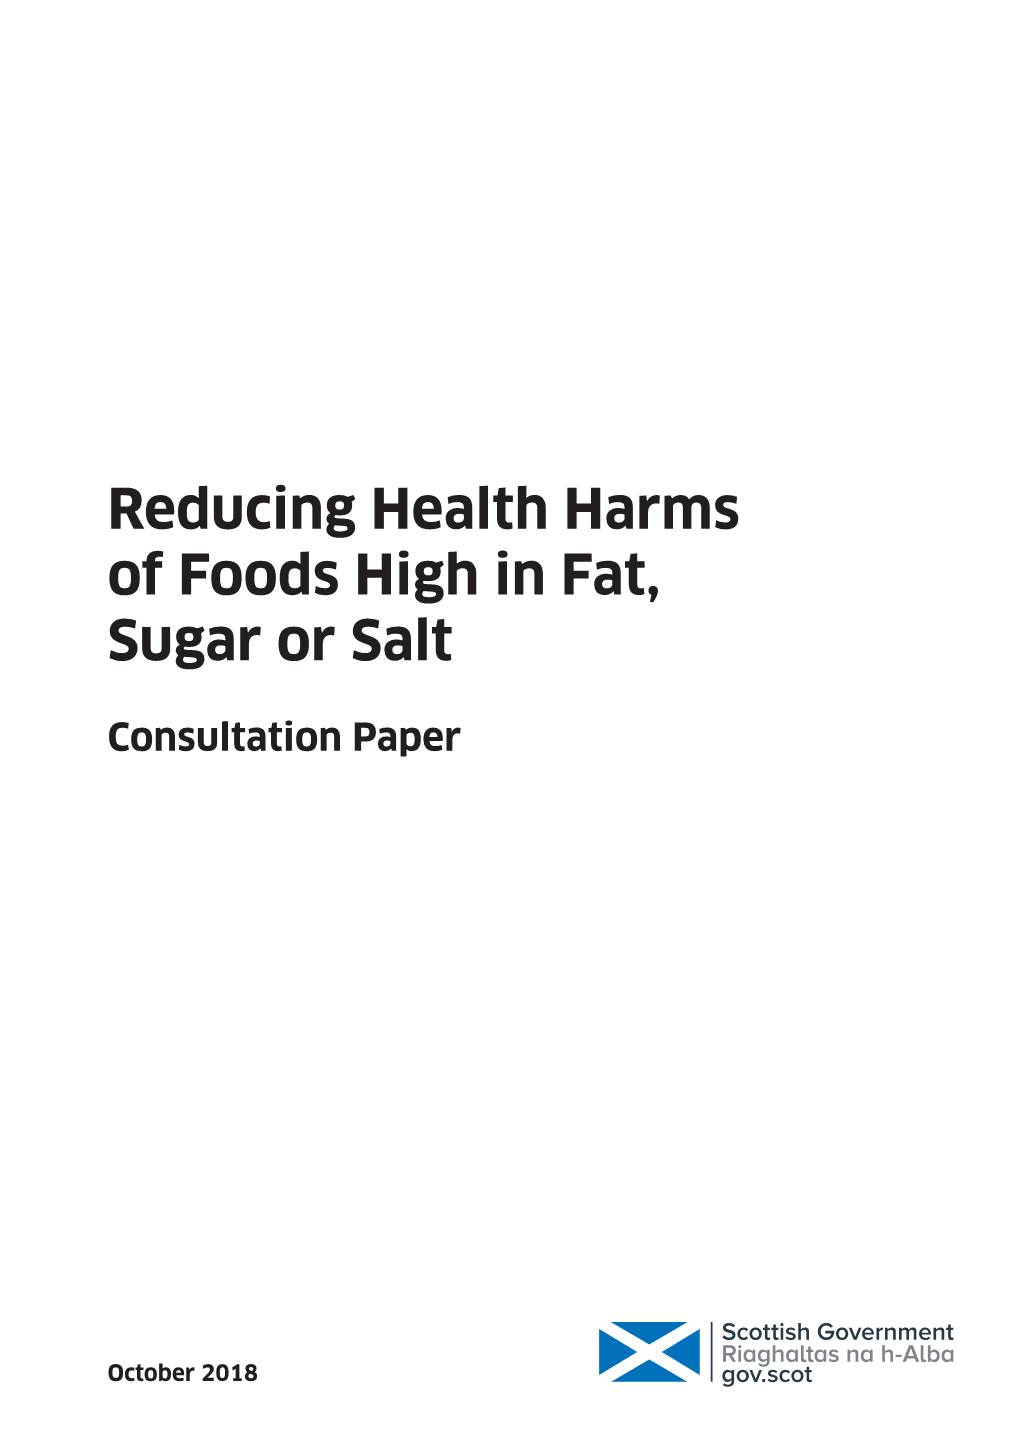 Reducing Health Harms of Foods High in Fat, Sugar Or Salt